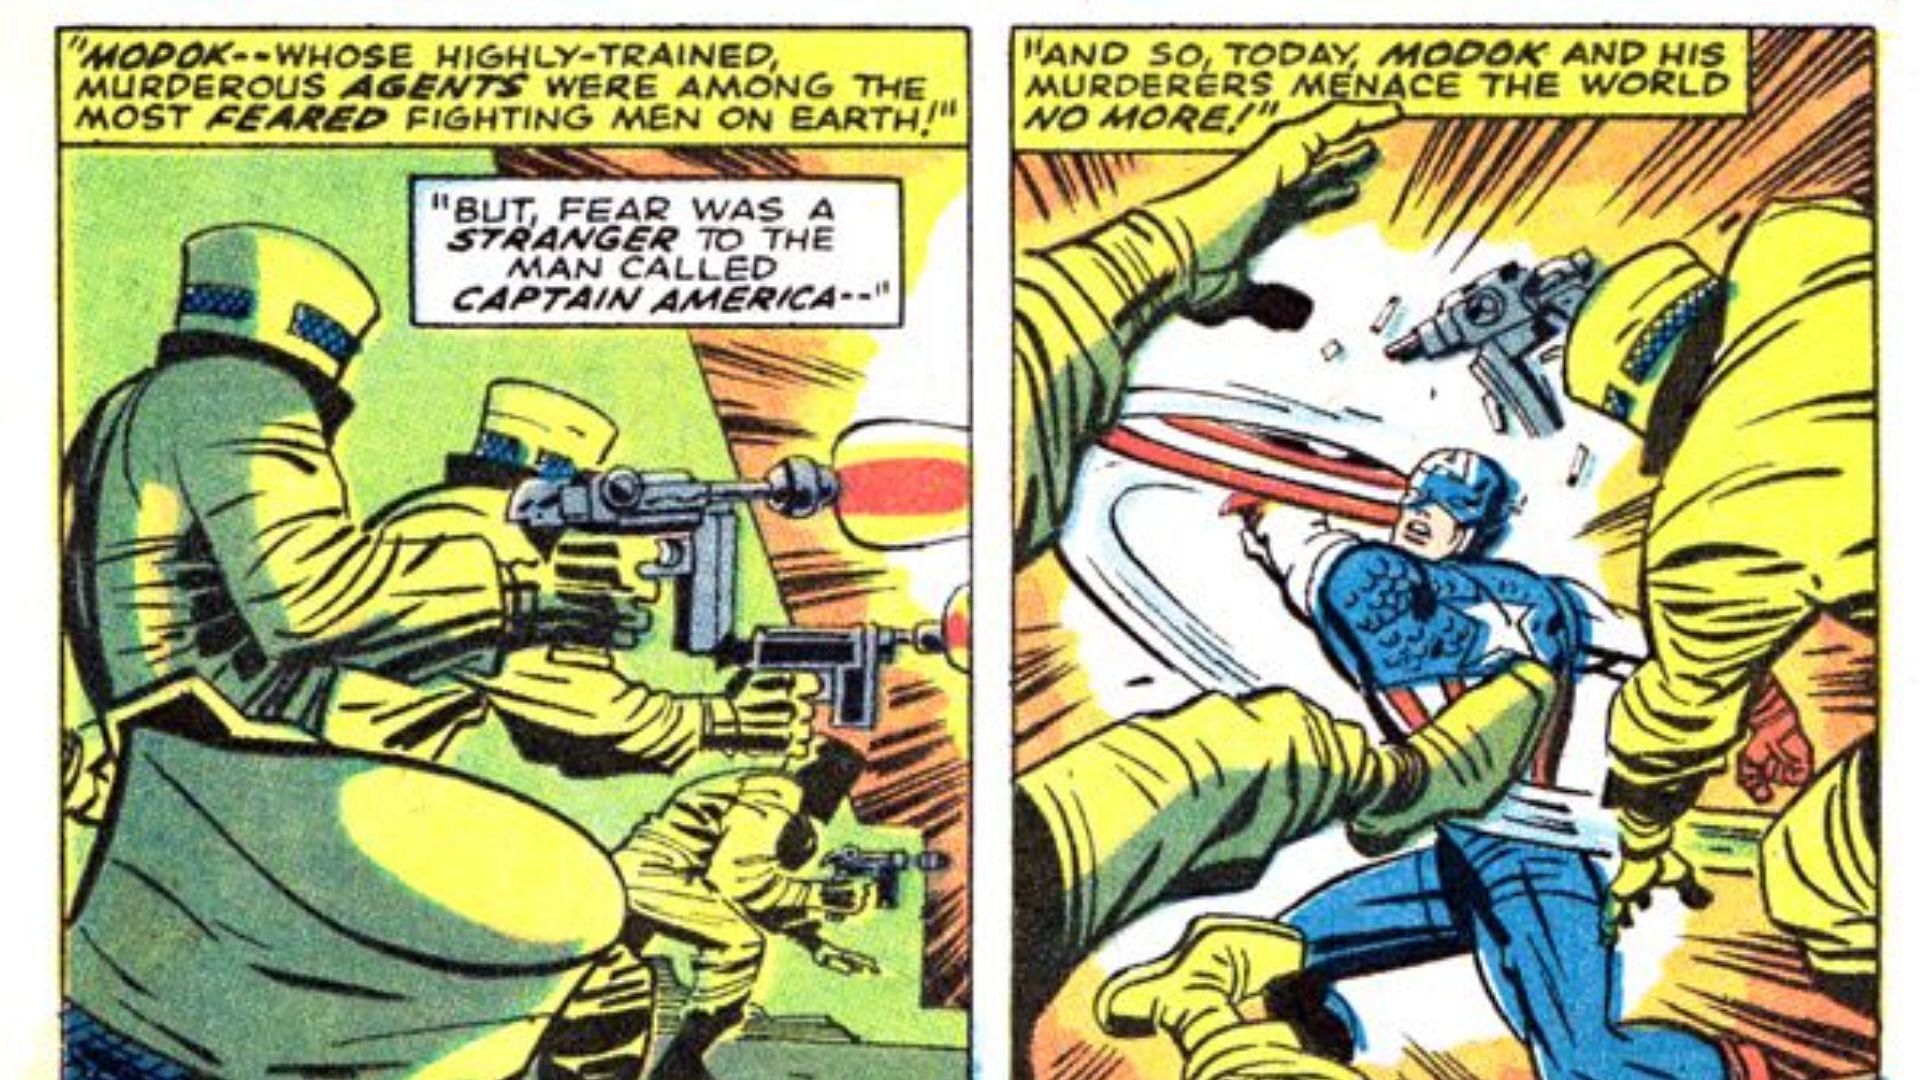 Captain America #133 (Image via Marvel)